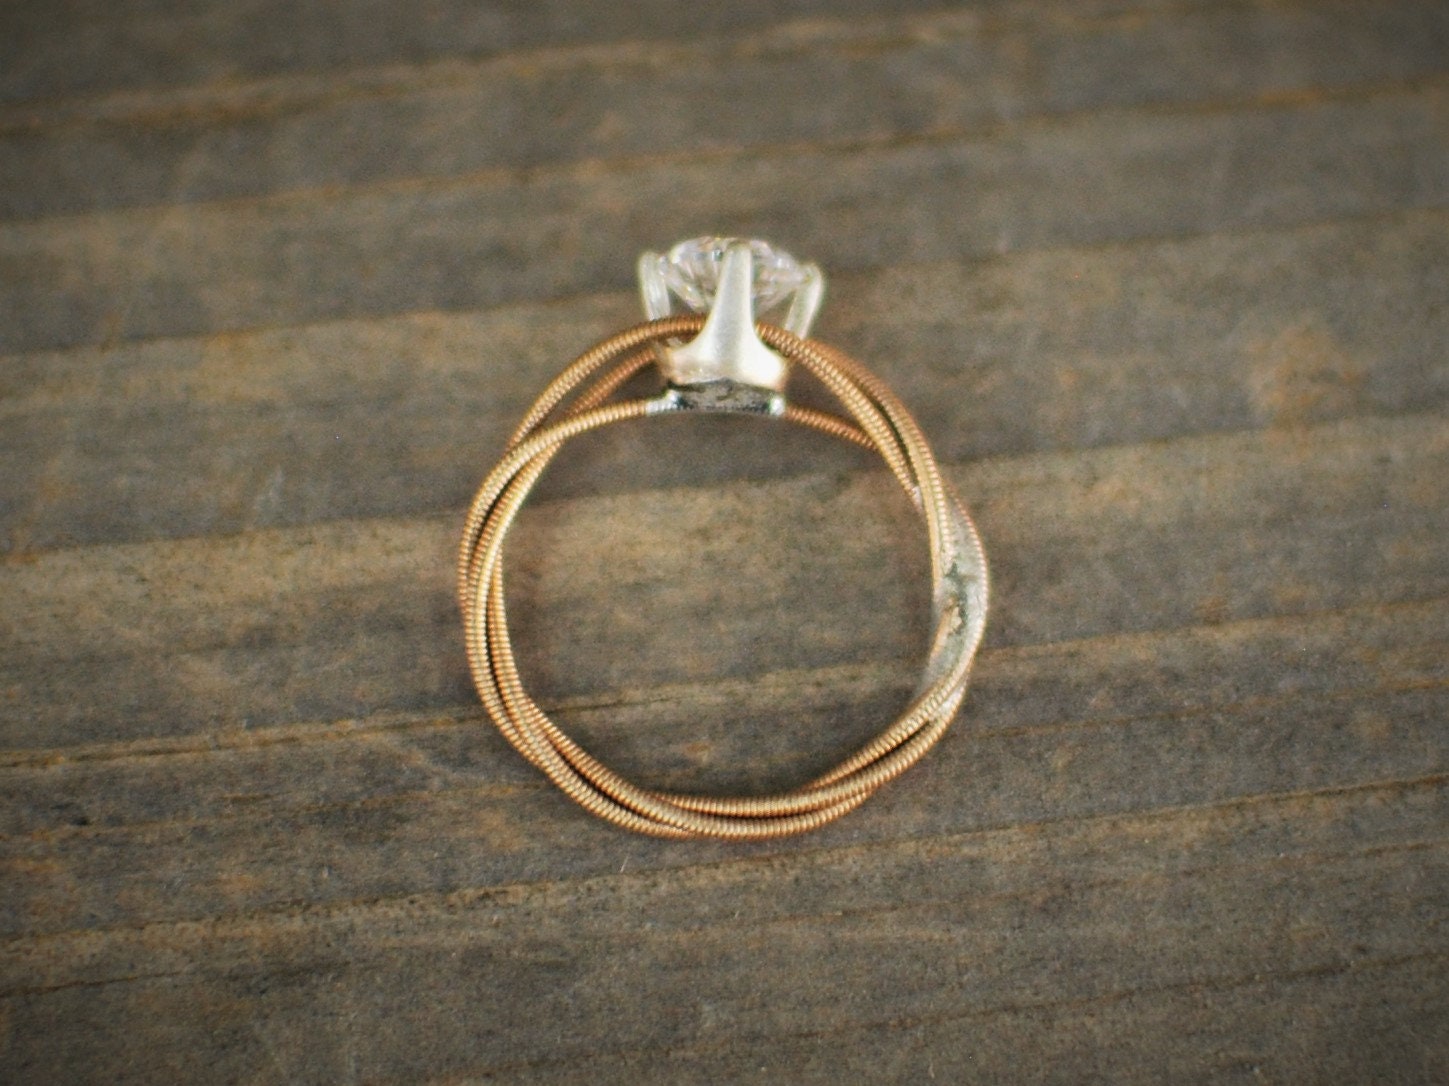 Guitar String Engagement Ring, Purity Ring, Rose Gold Guitar Ring, Guitar String Jewelry, Unique Engagement Ring, Guitar Gifts, Wedding Ring